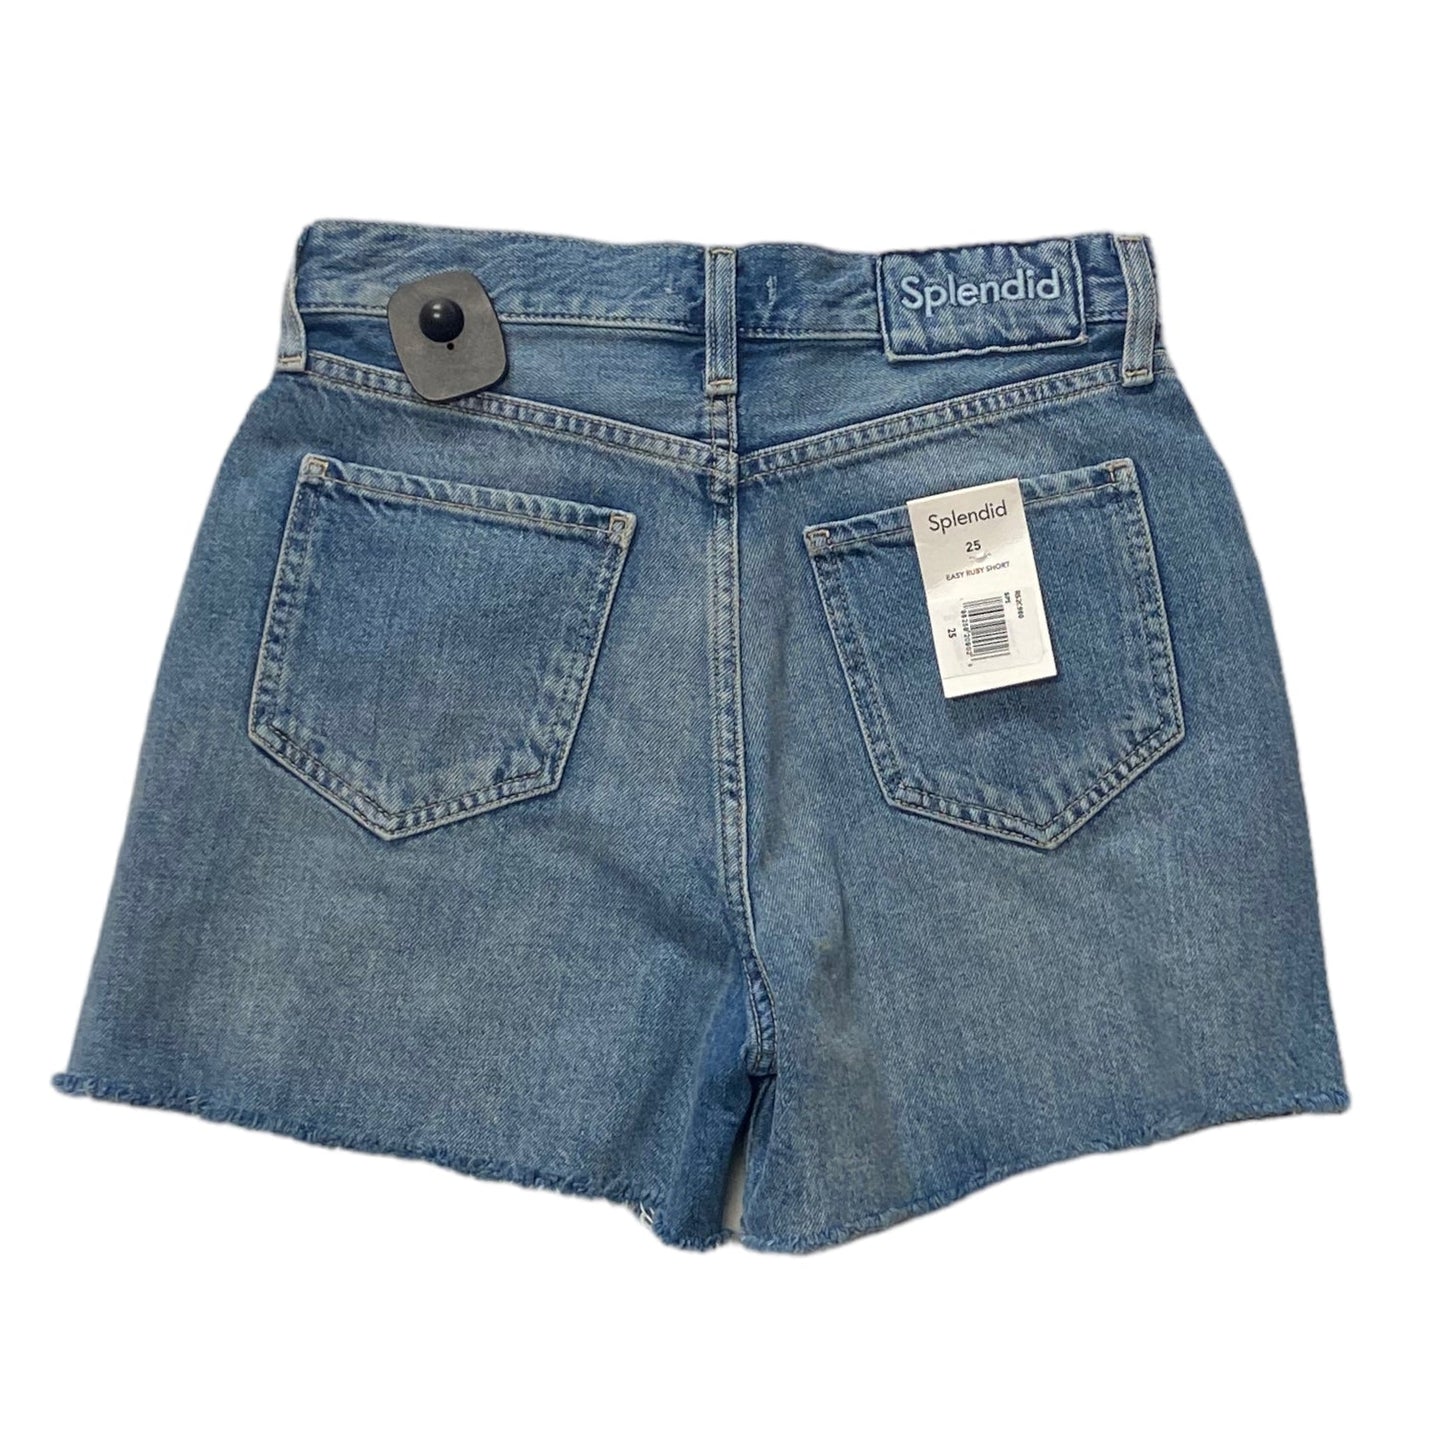 Blue Denim Shorts Splendid, Size 0